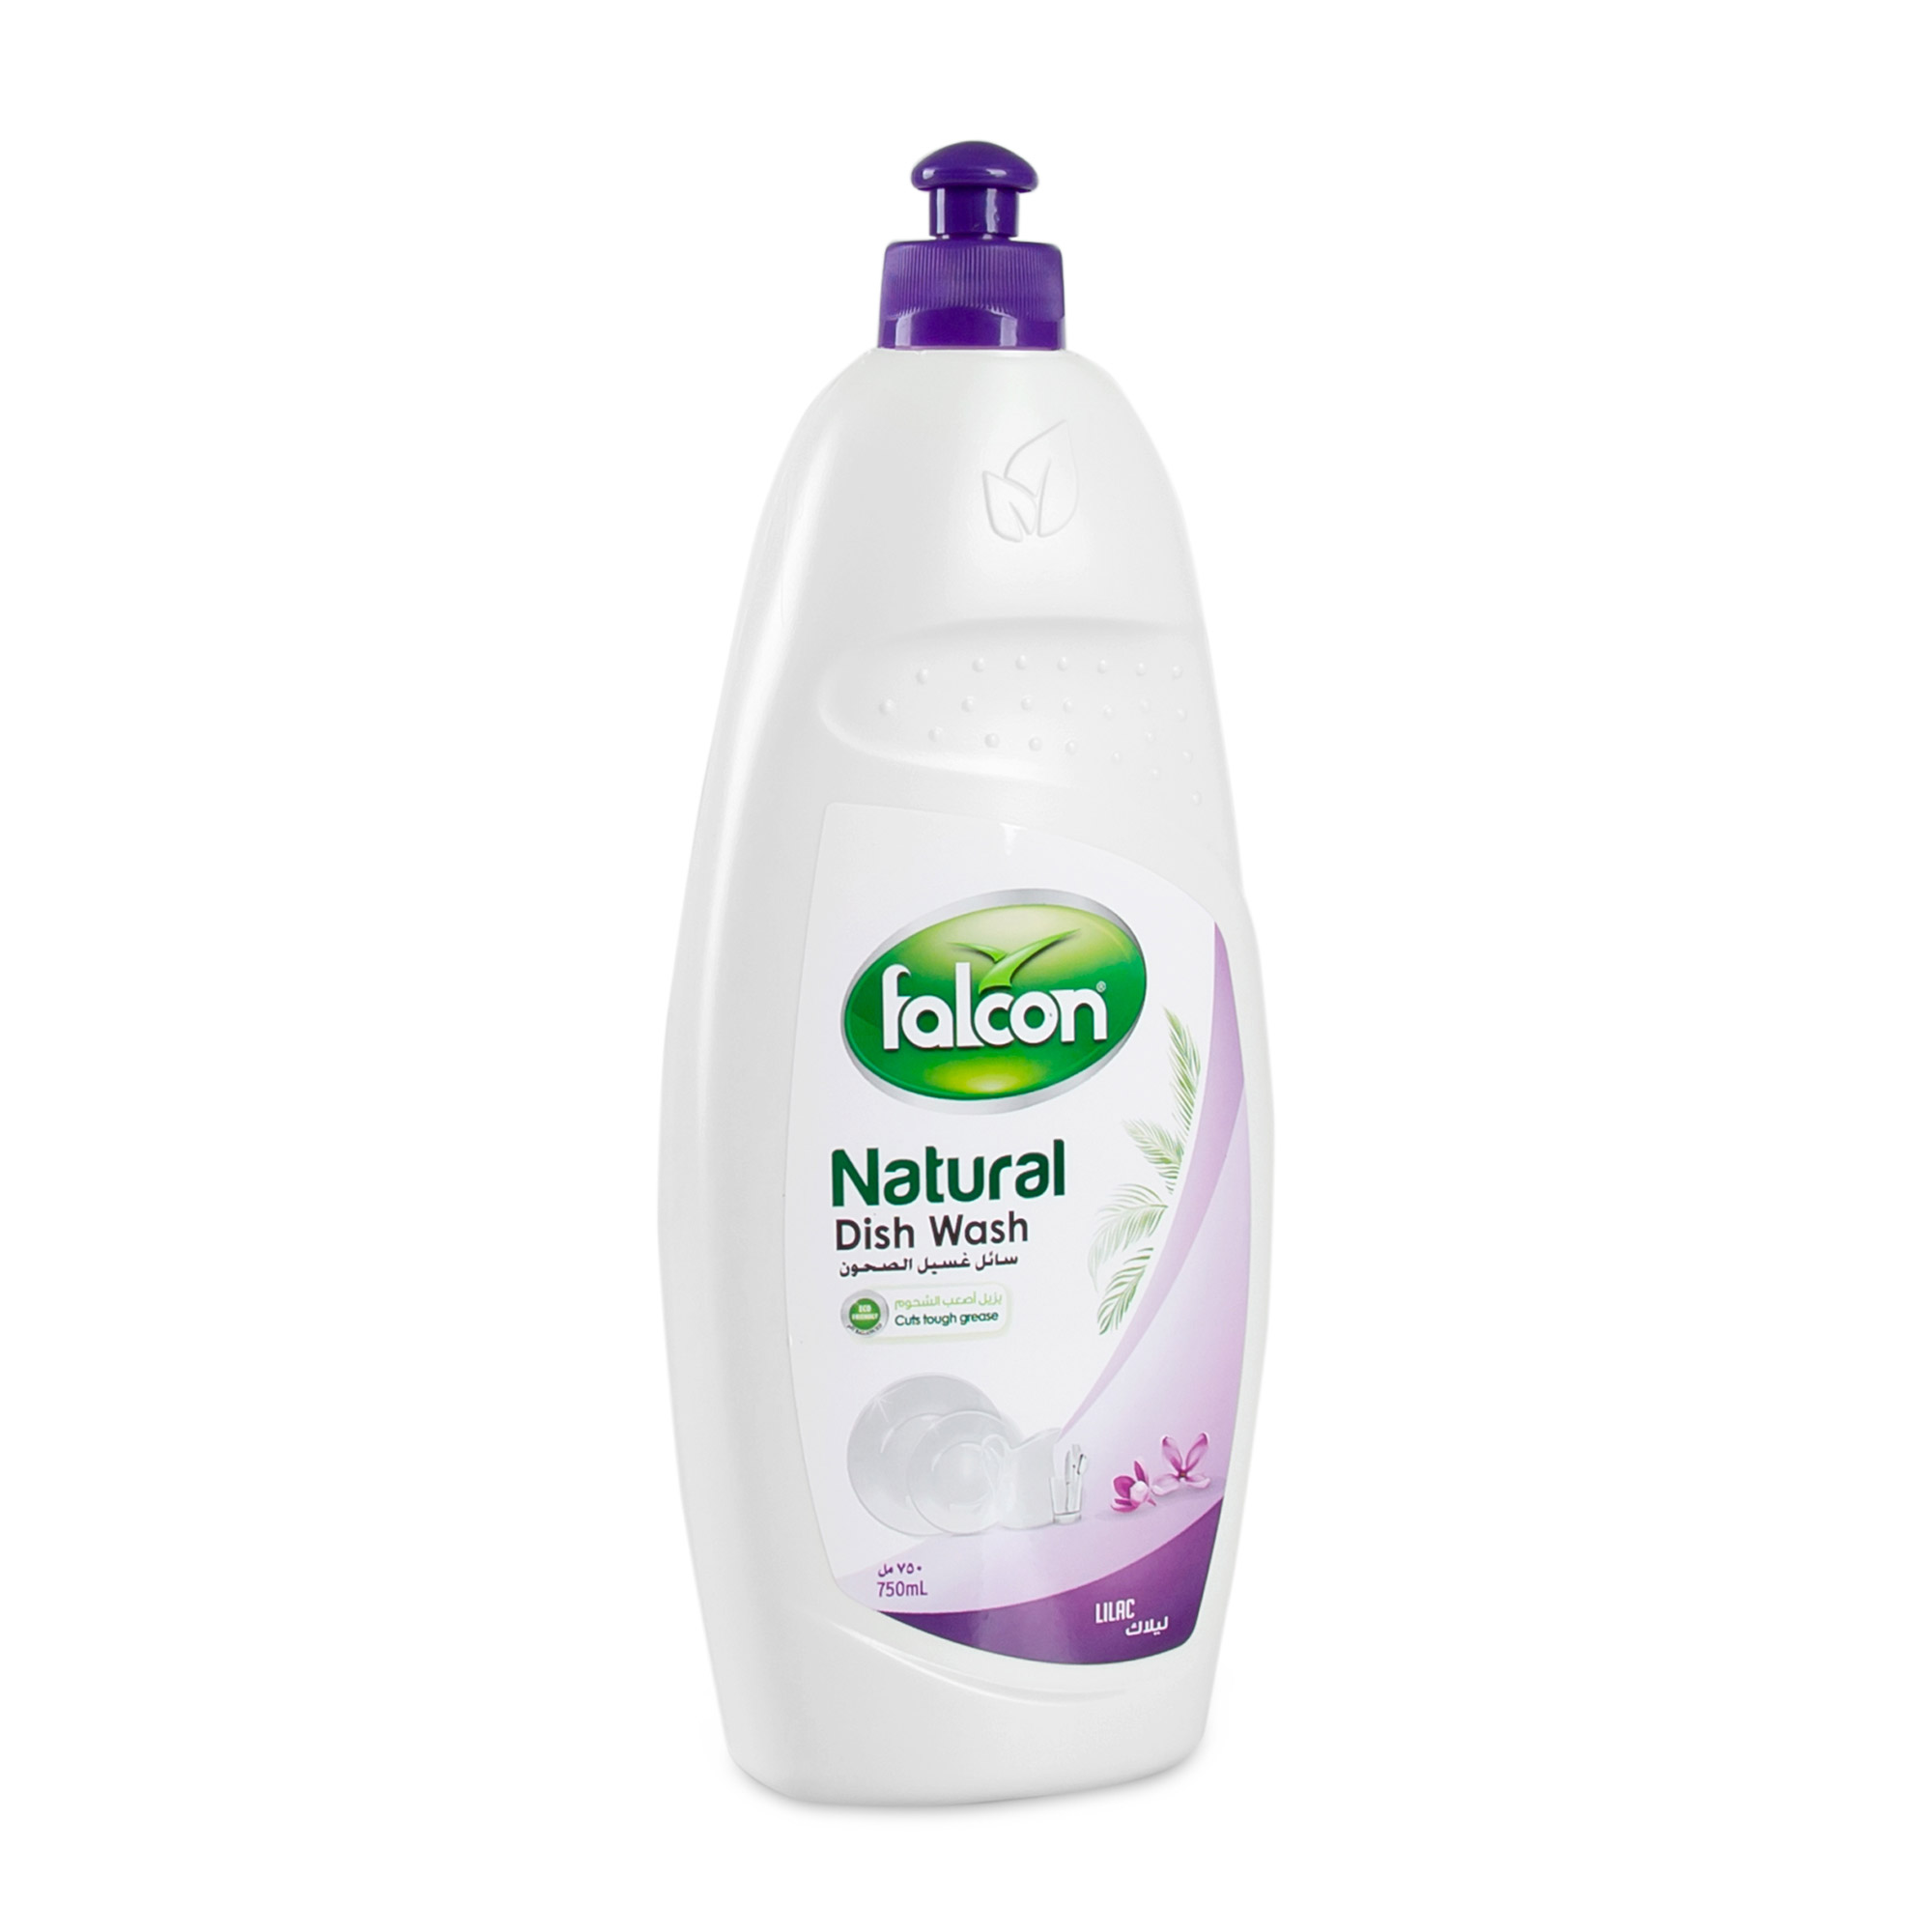 Falcon Natural Dish Wash Liquid (Lilac)